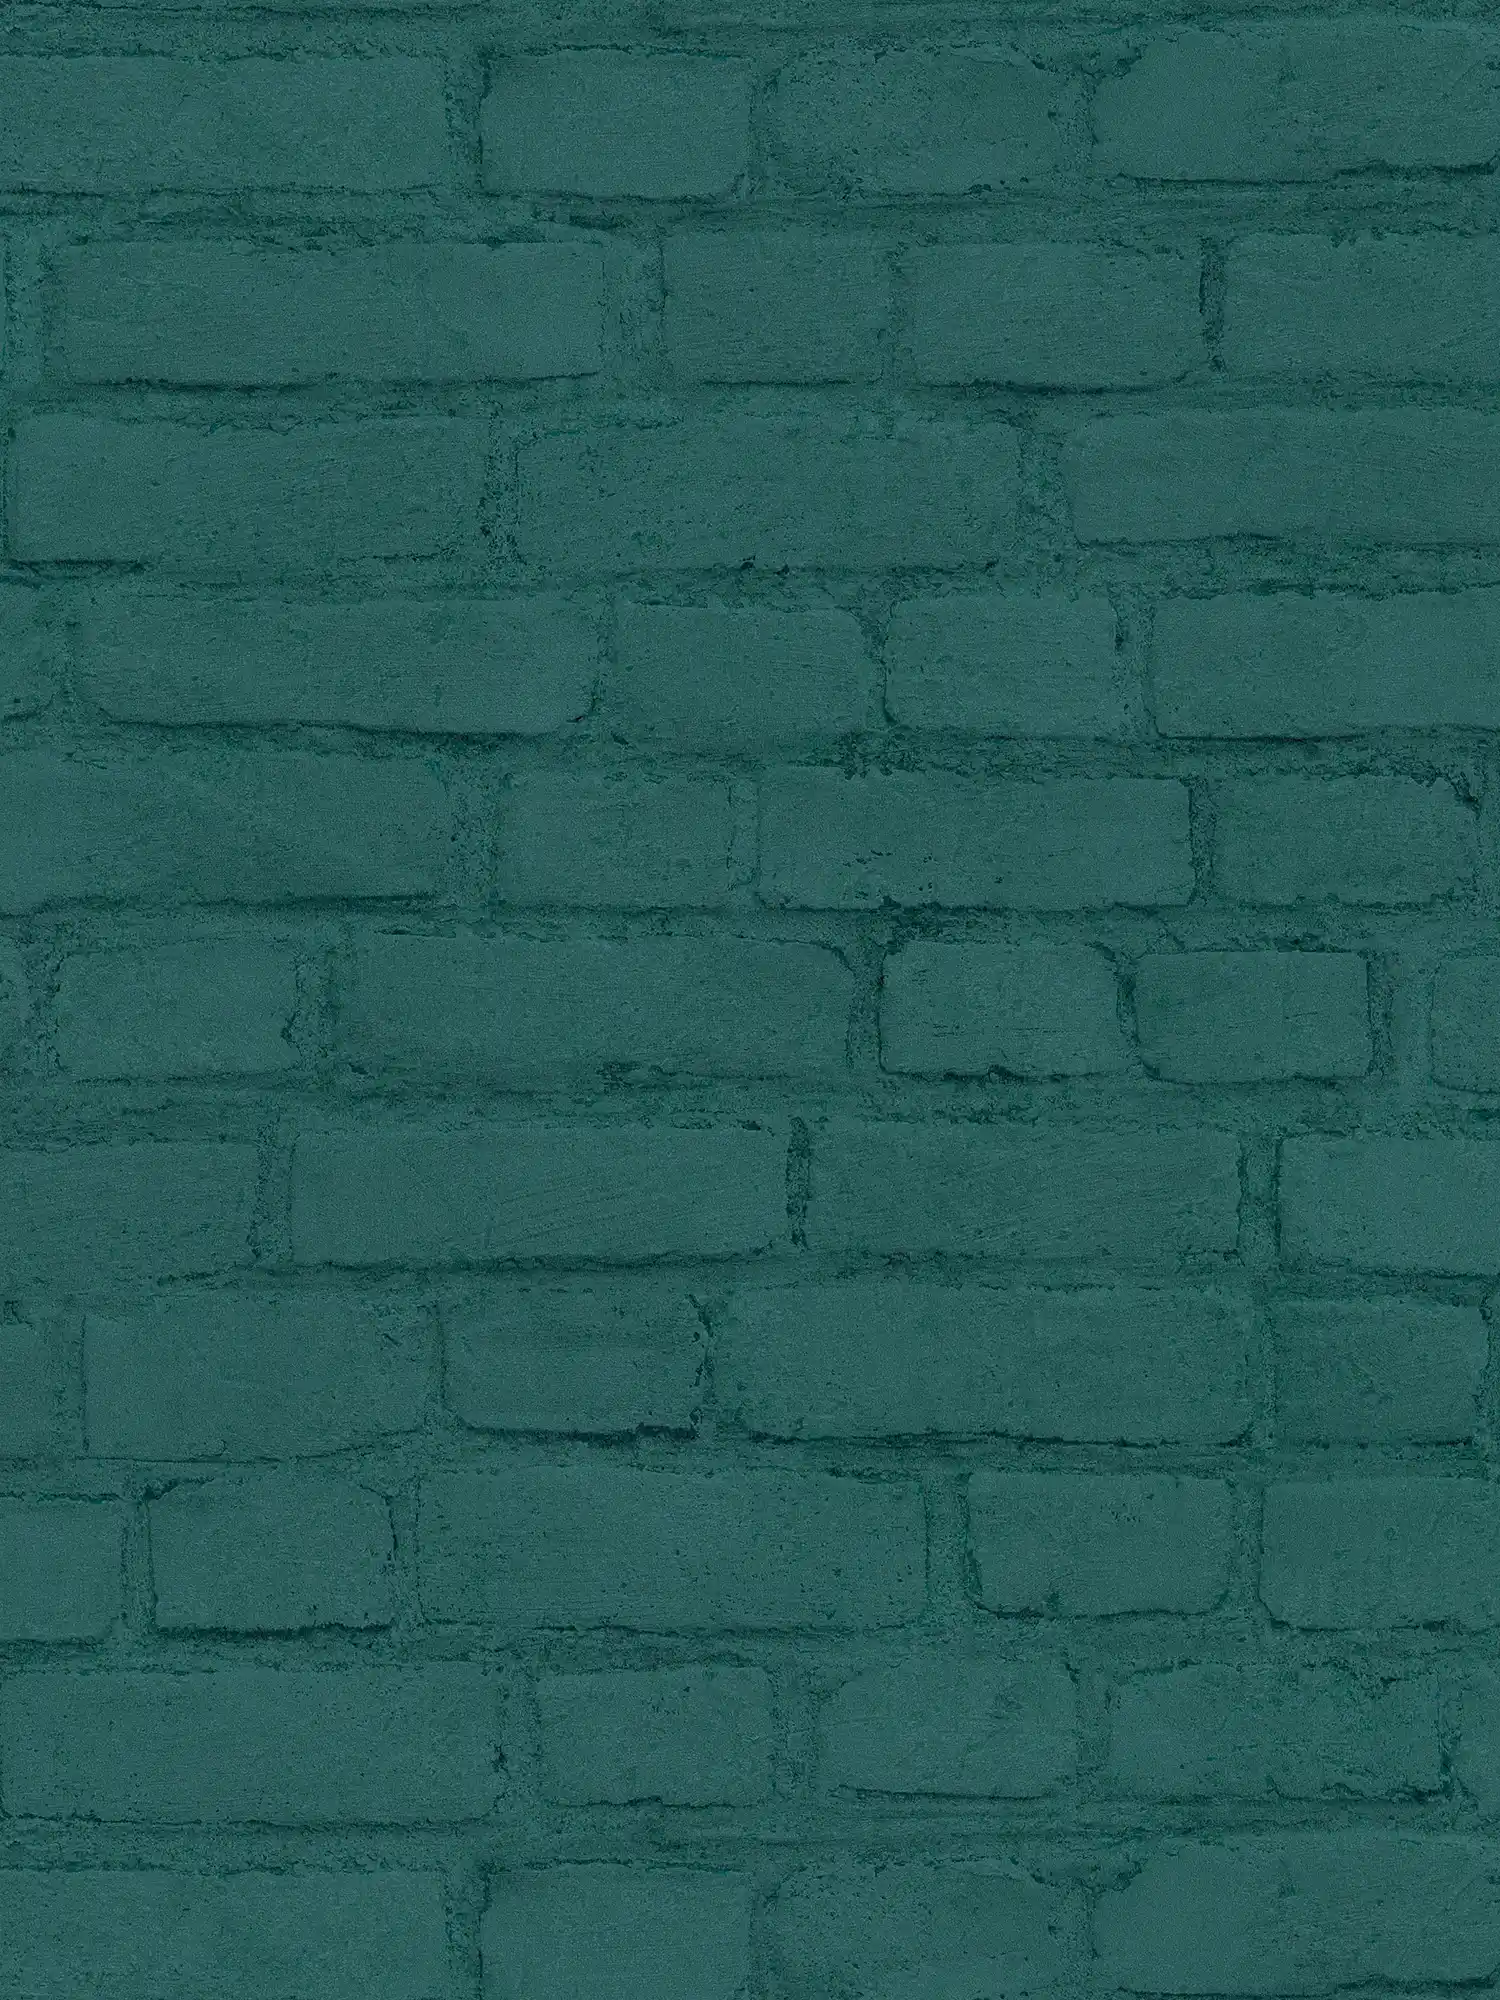         Steintapete Mauer in Klinker-Optik – Grün
    